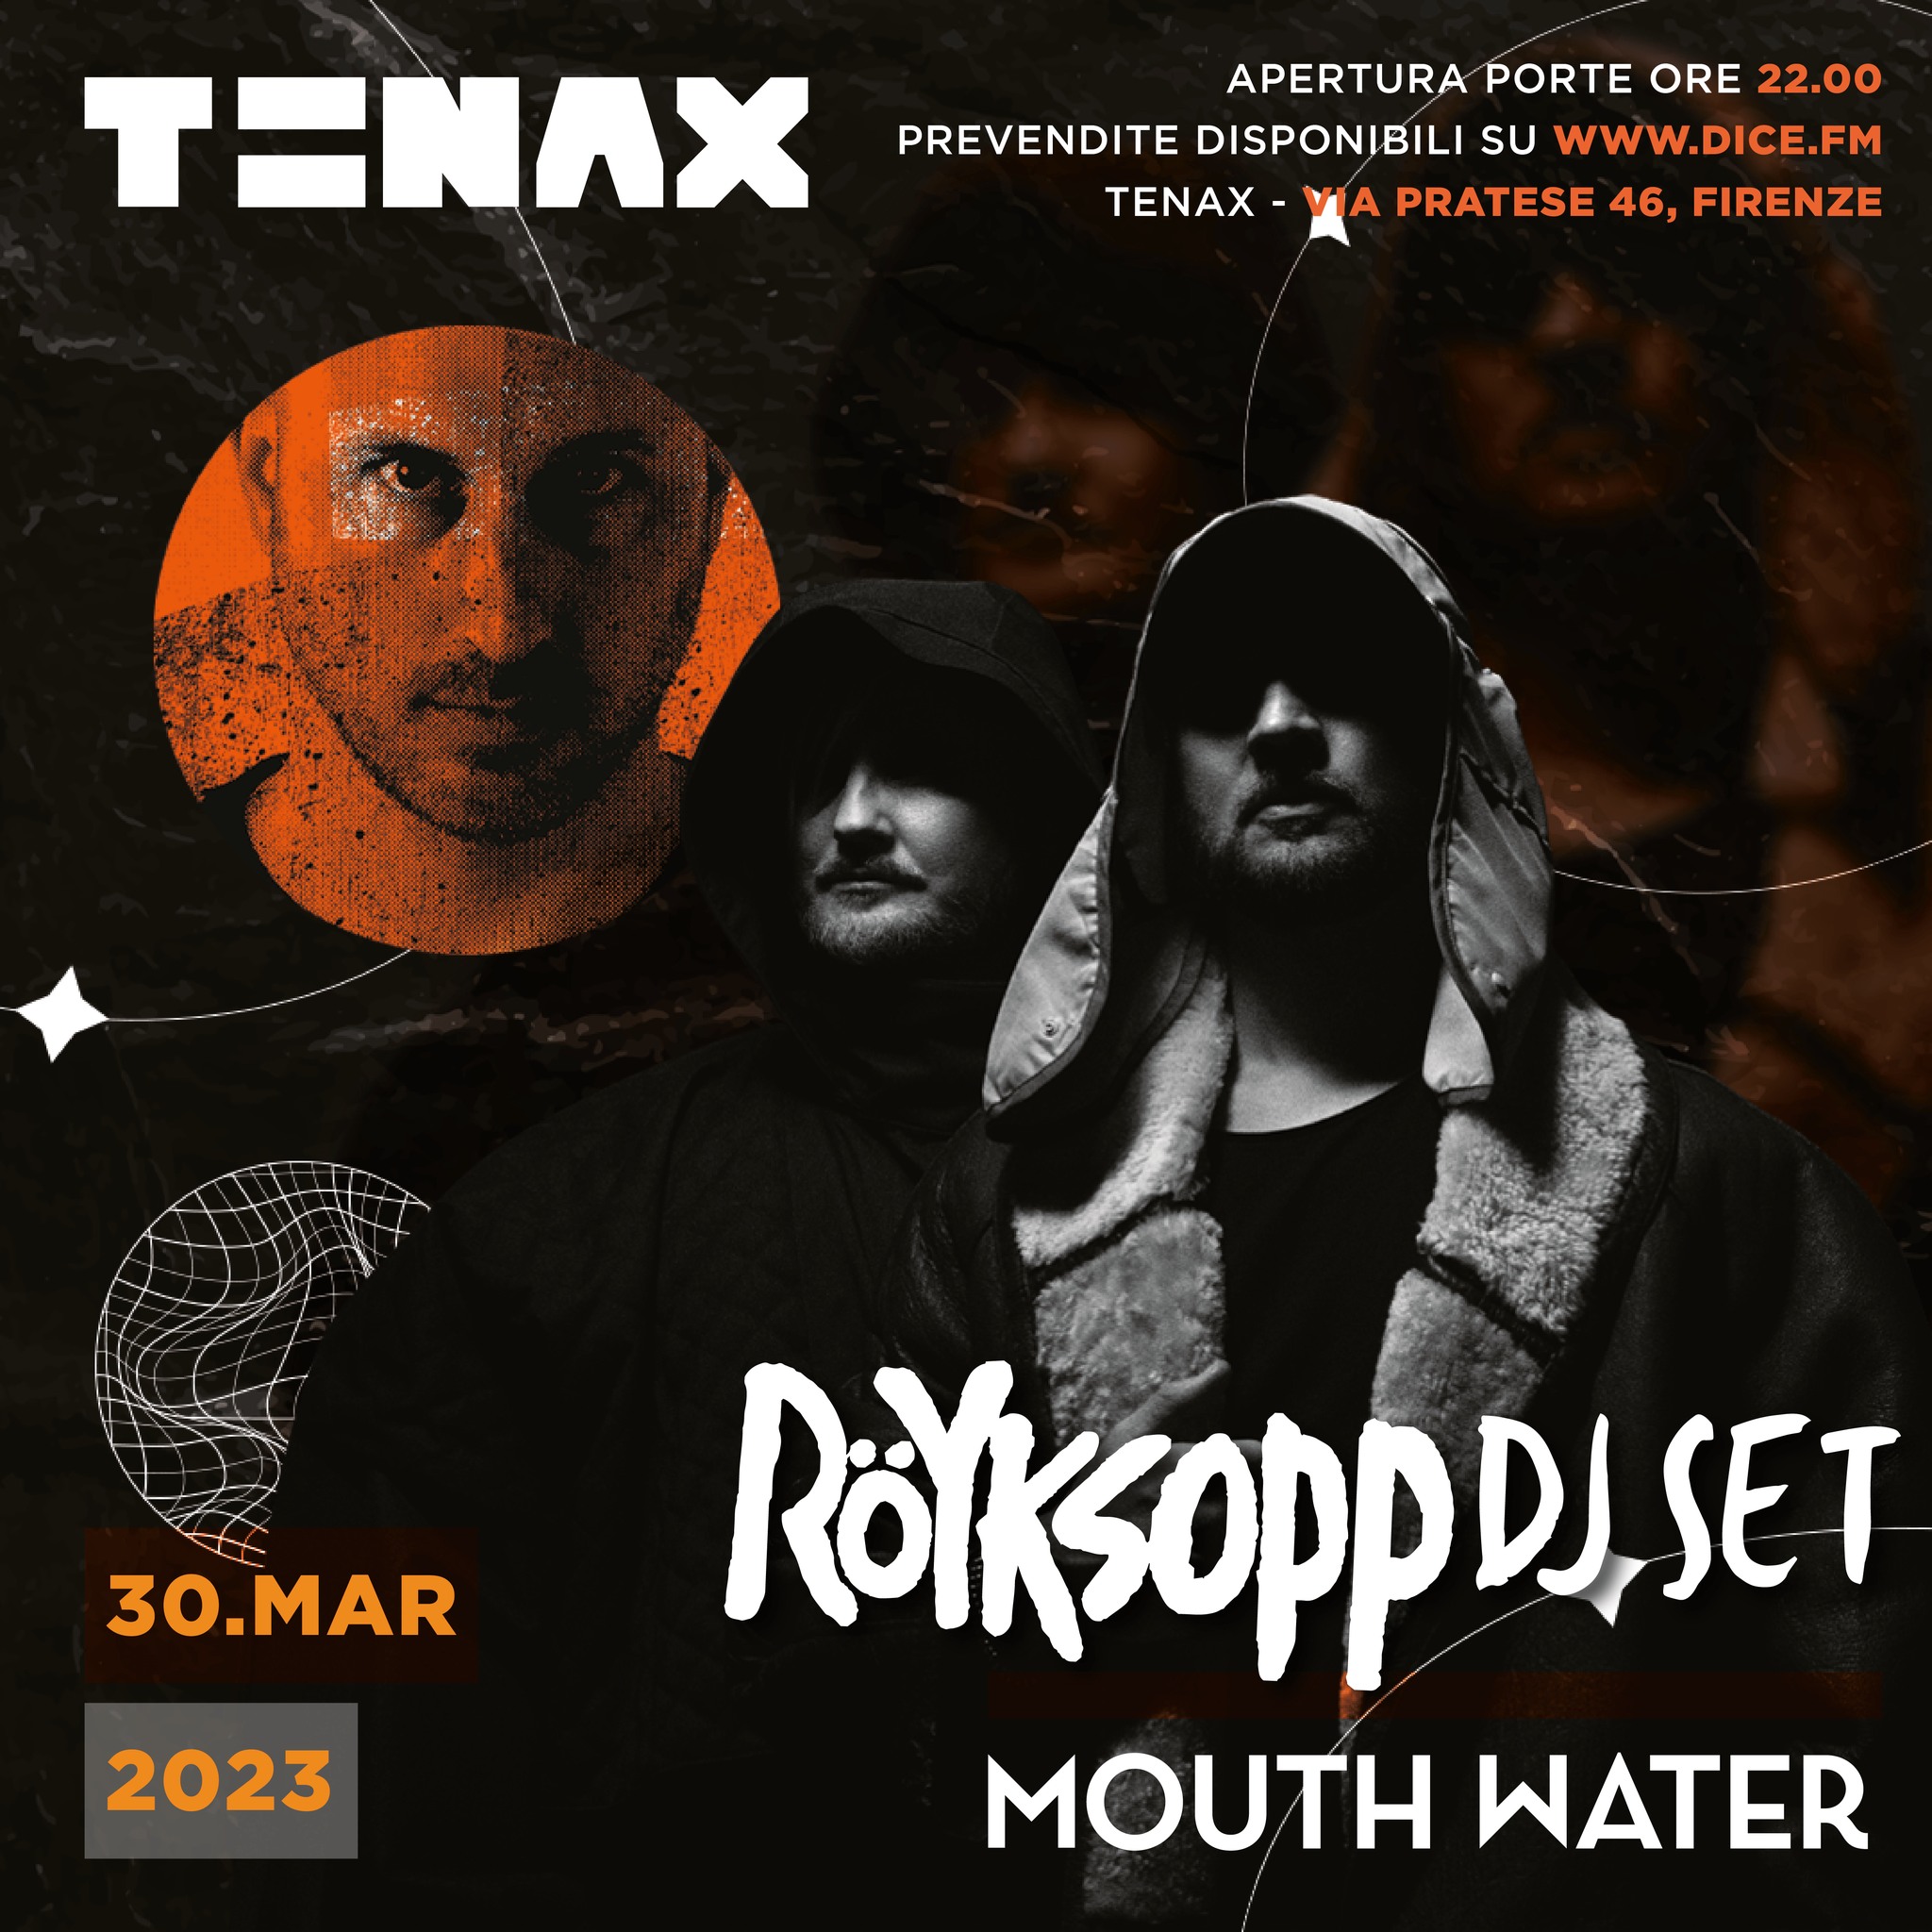 🎤 Röyksopp e Mouth Water al TENAX